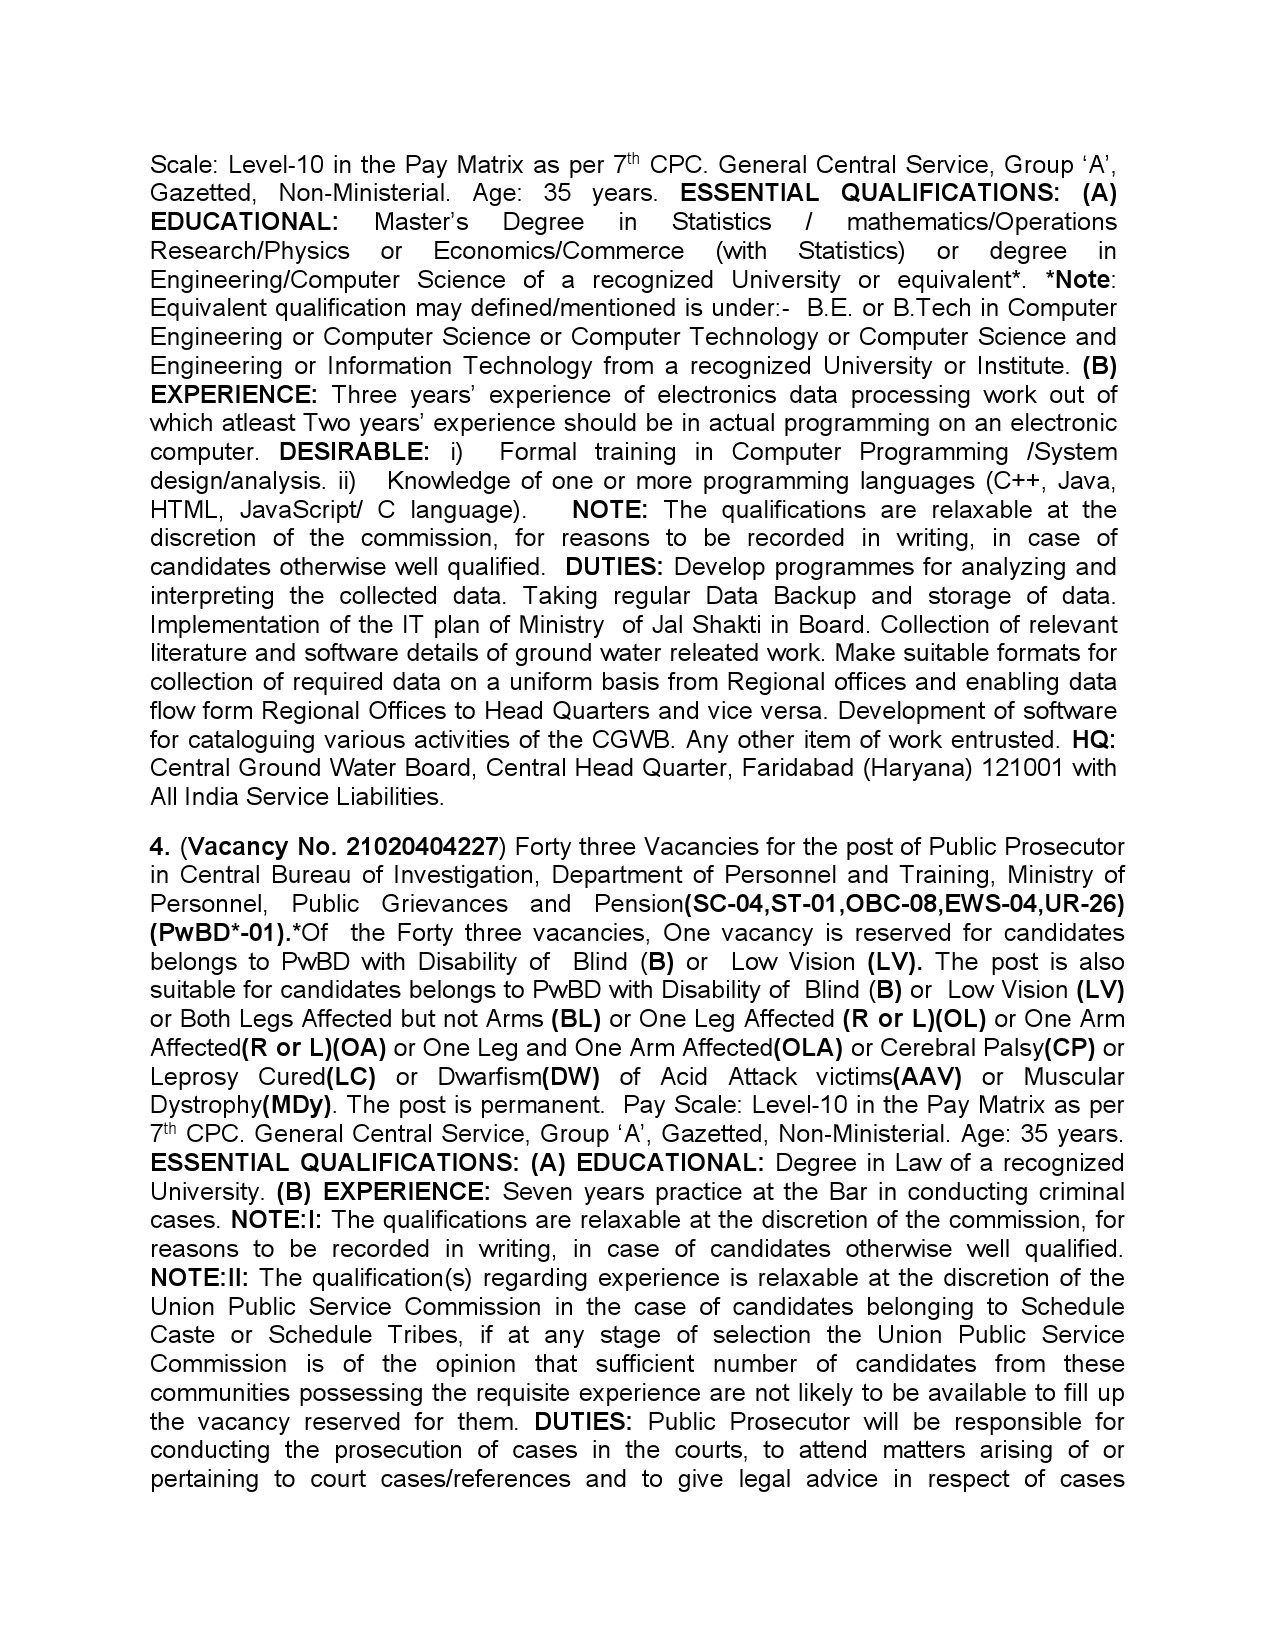 UPSC Notification 042021 for Multiple vacancies - Notification Image 2